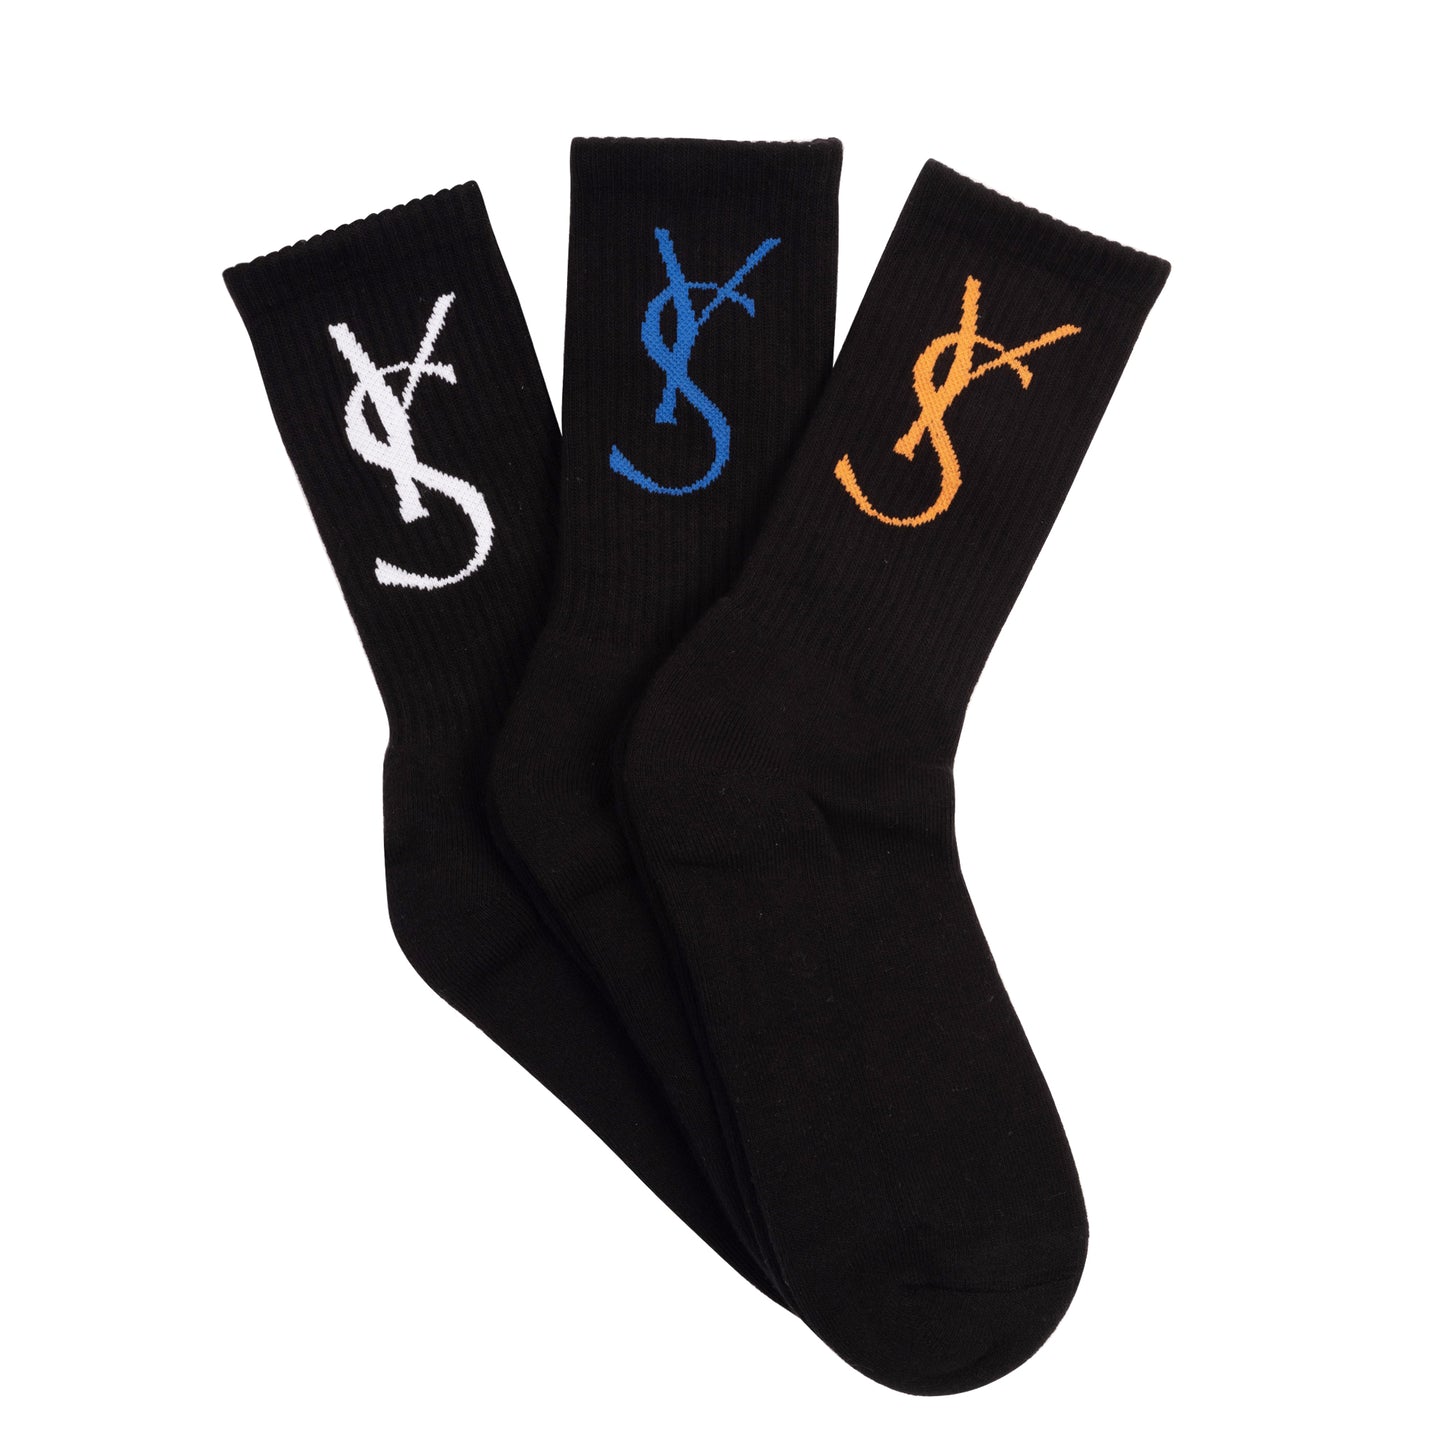 YS Socks 3 Pack (Black)